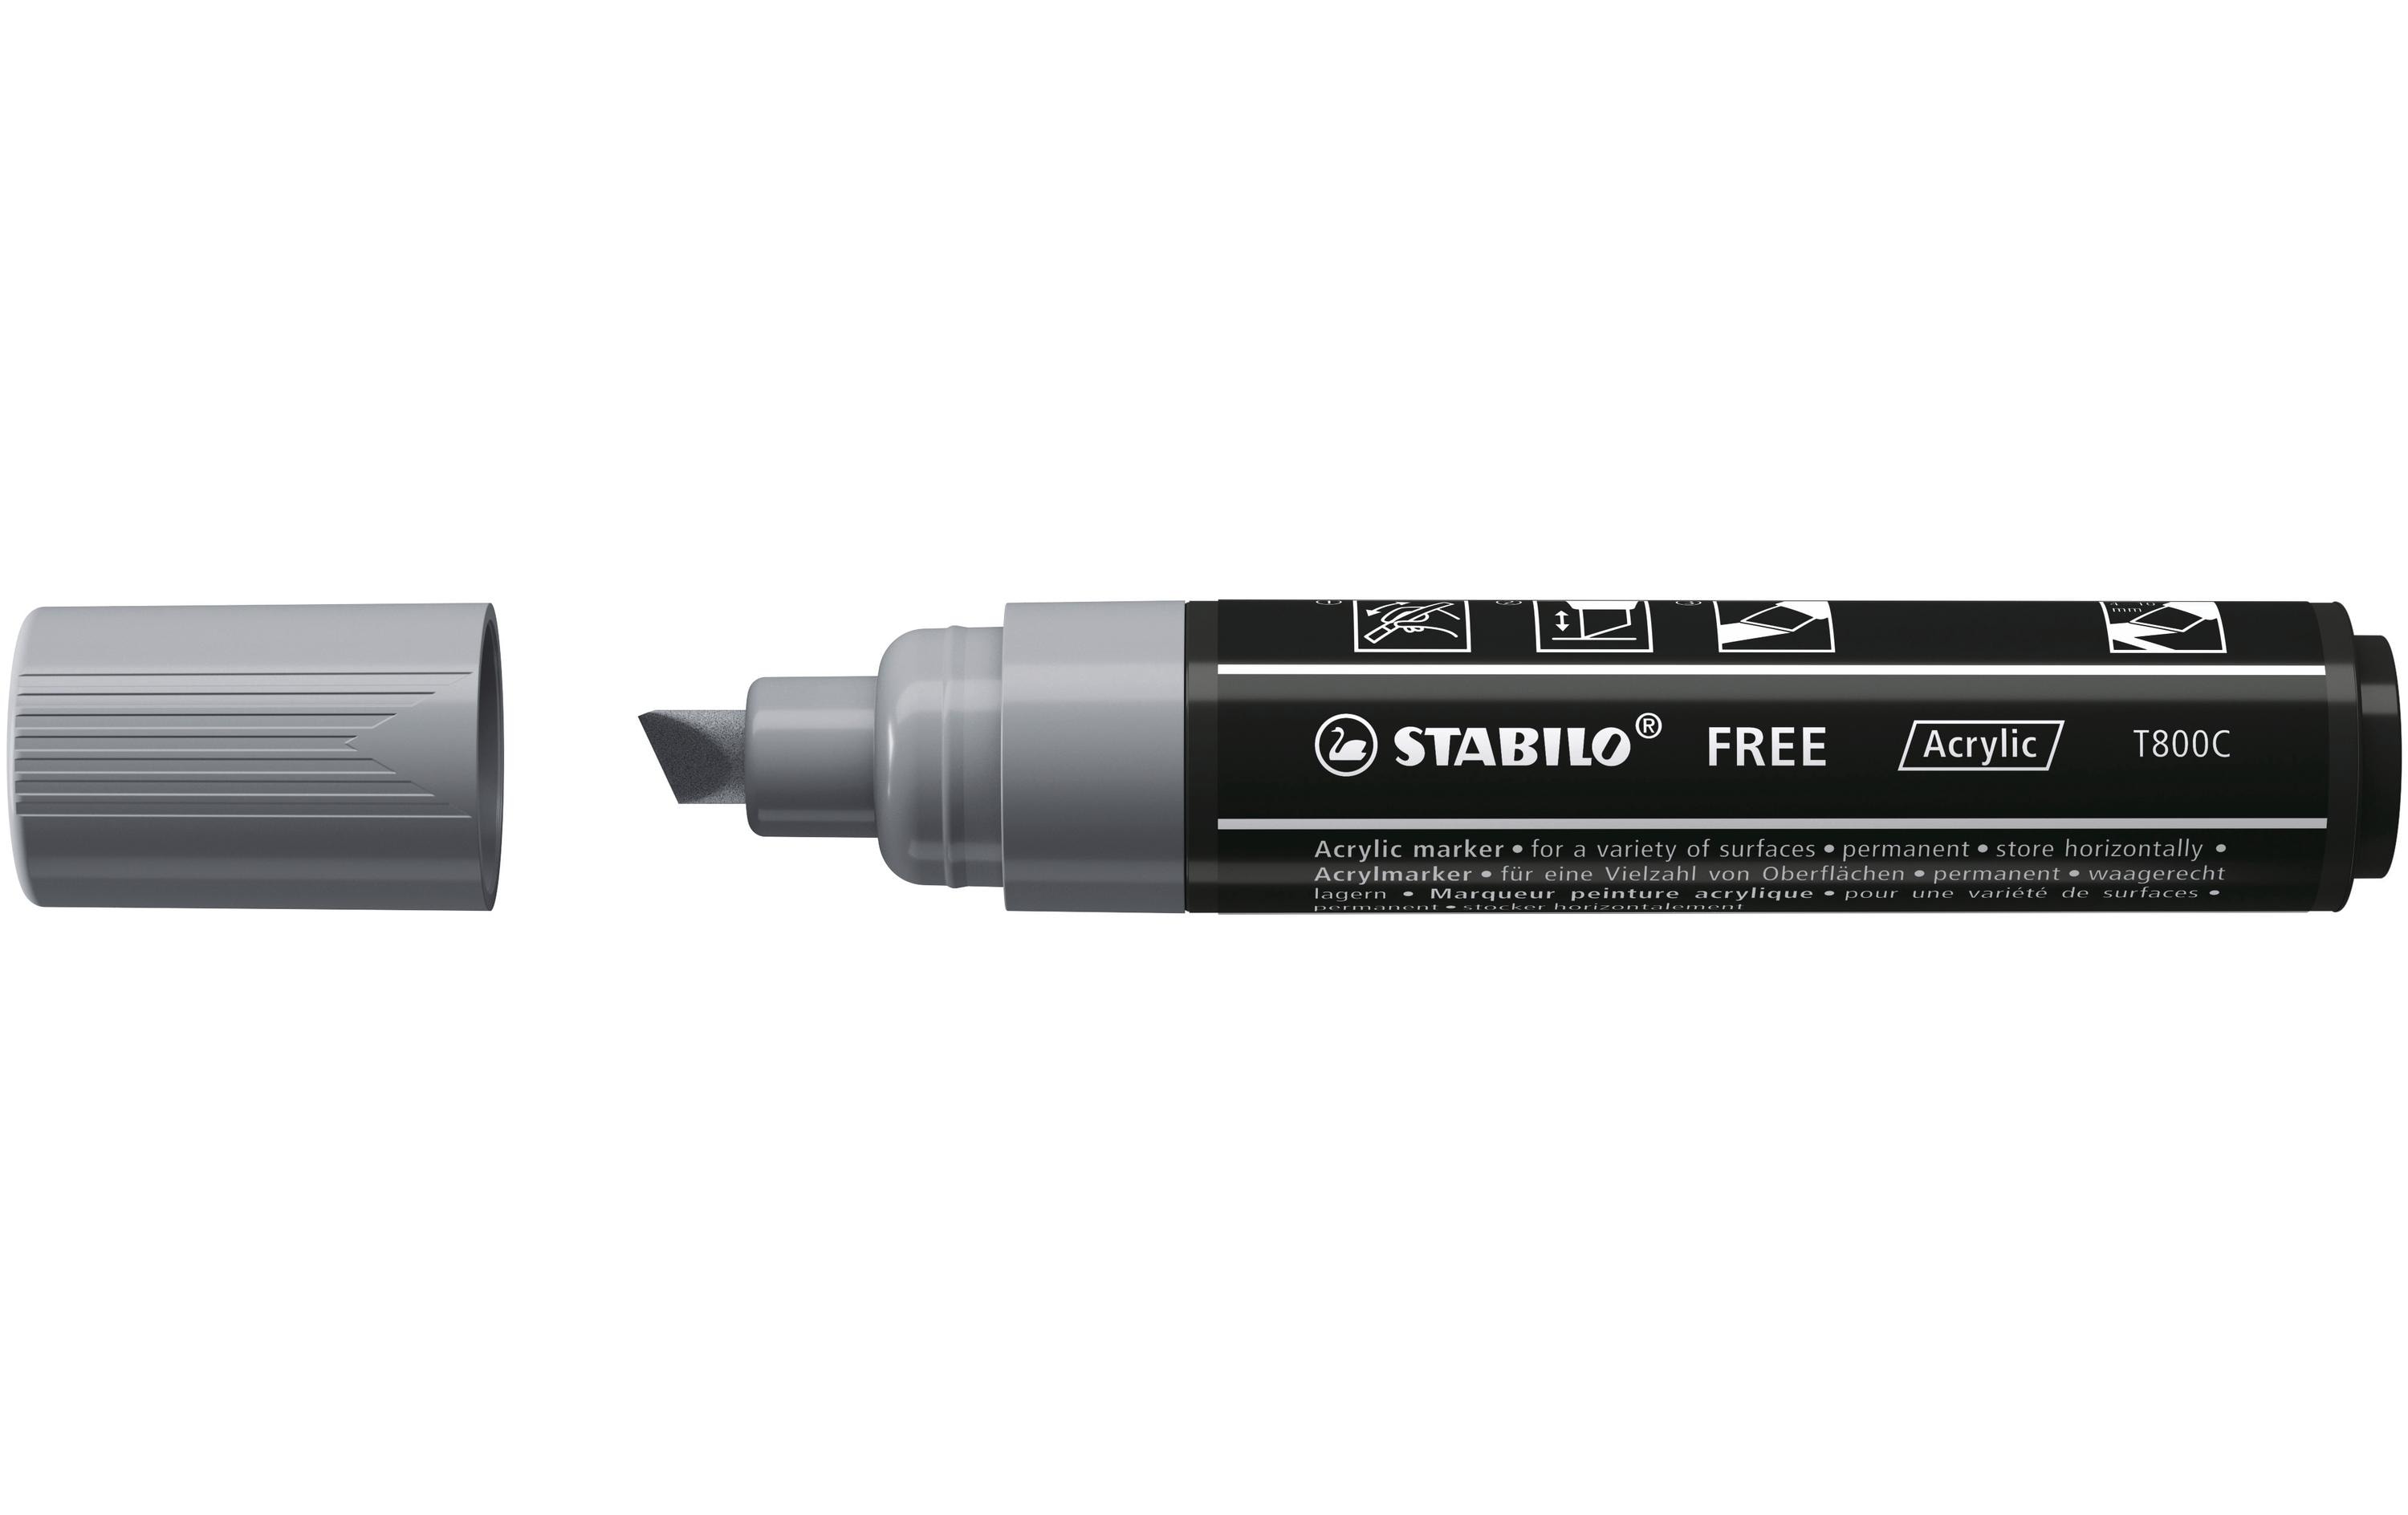 STABILO Acrylmarker Free Acrylic T800C Dunkelgrau